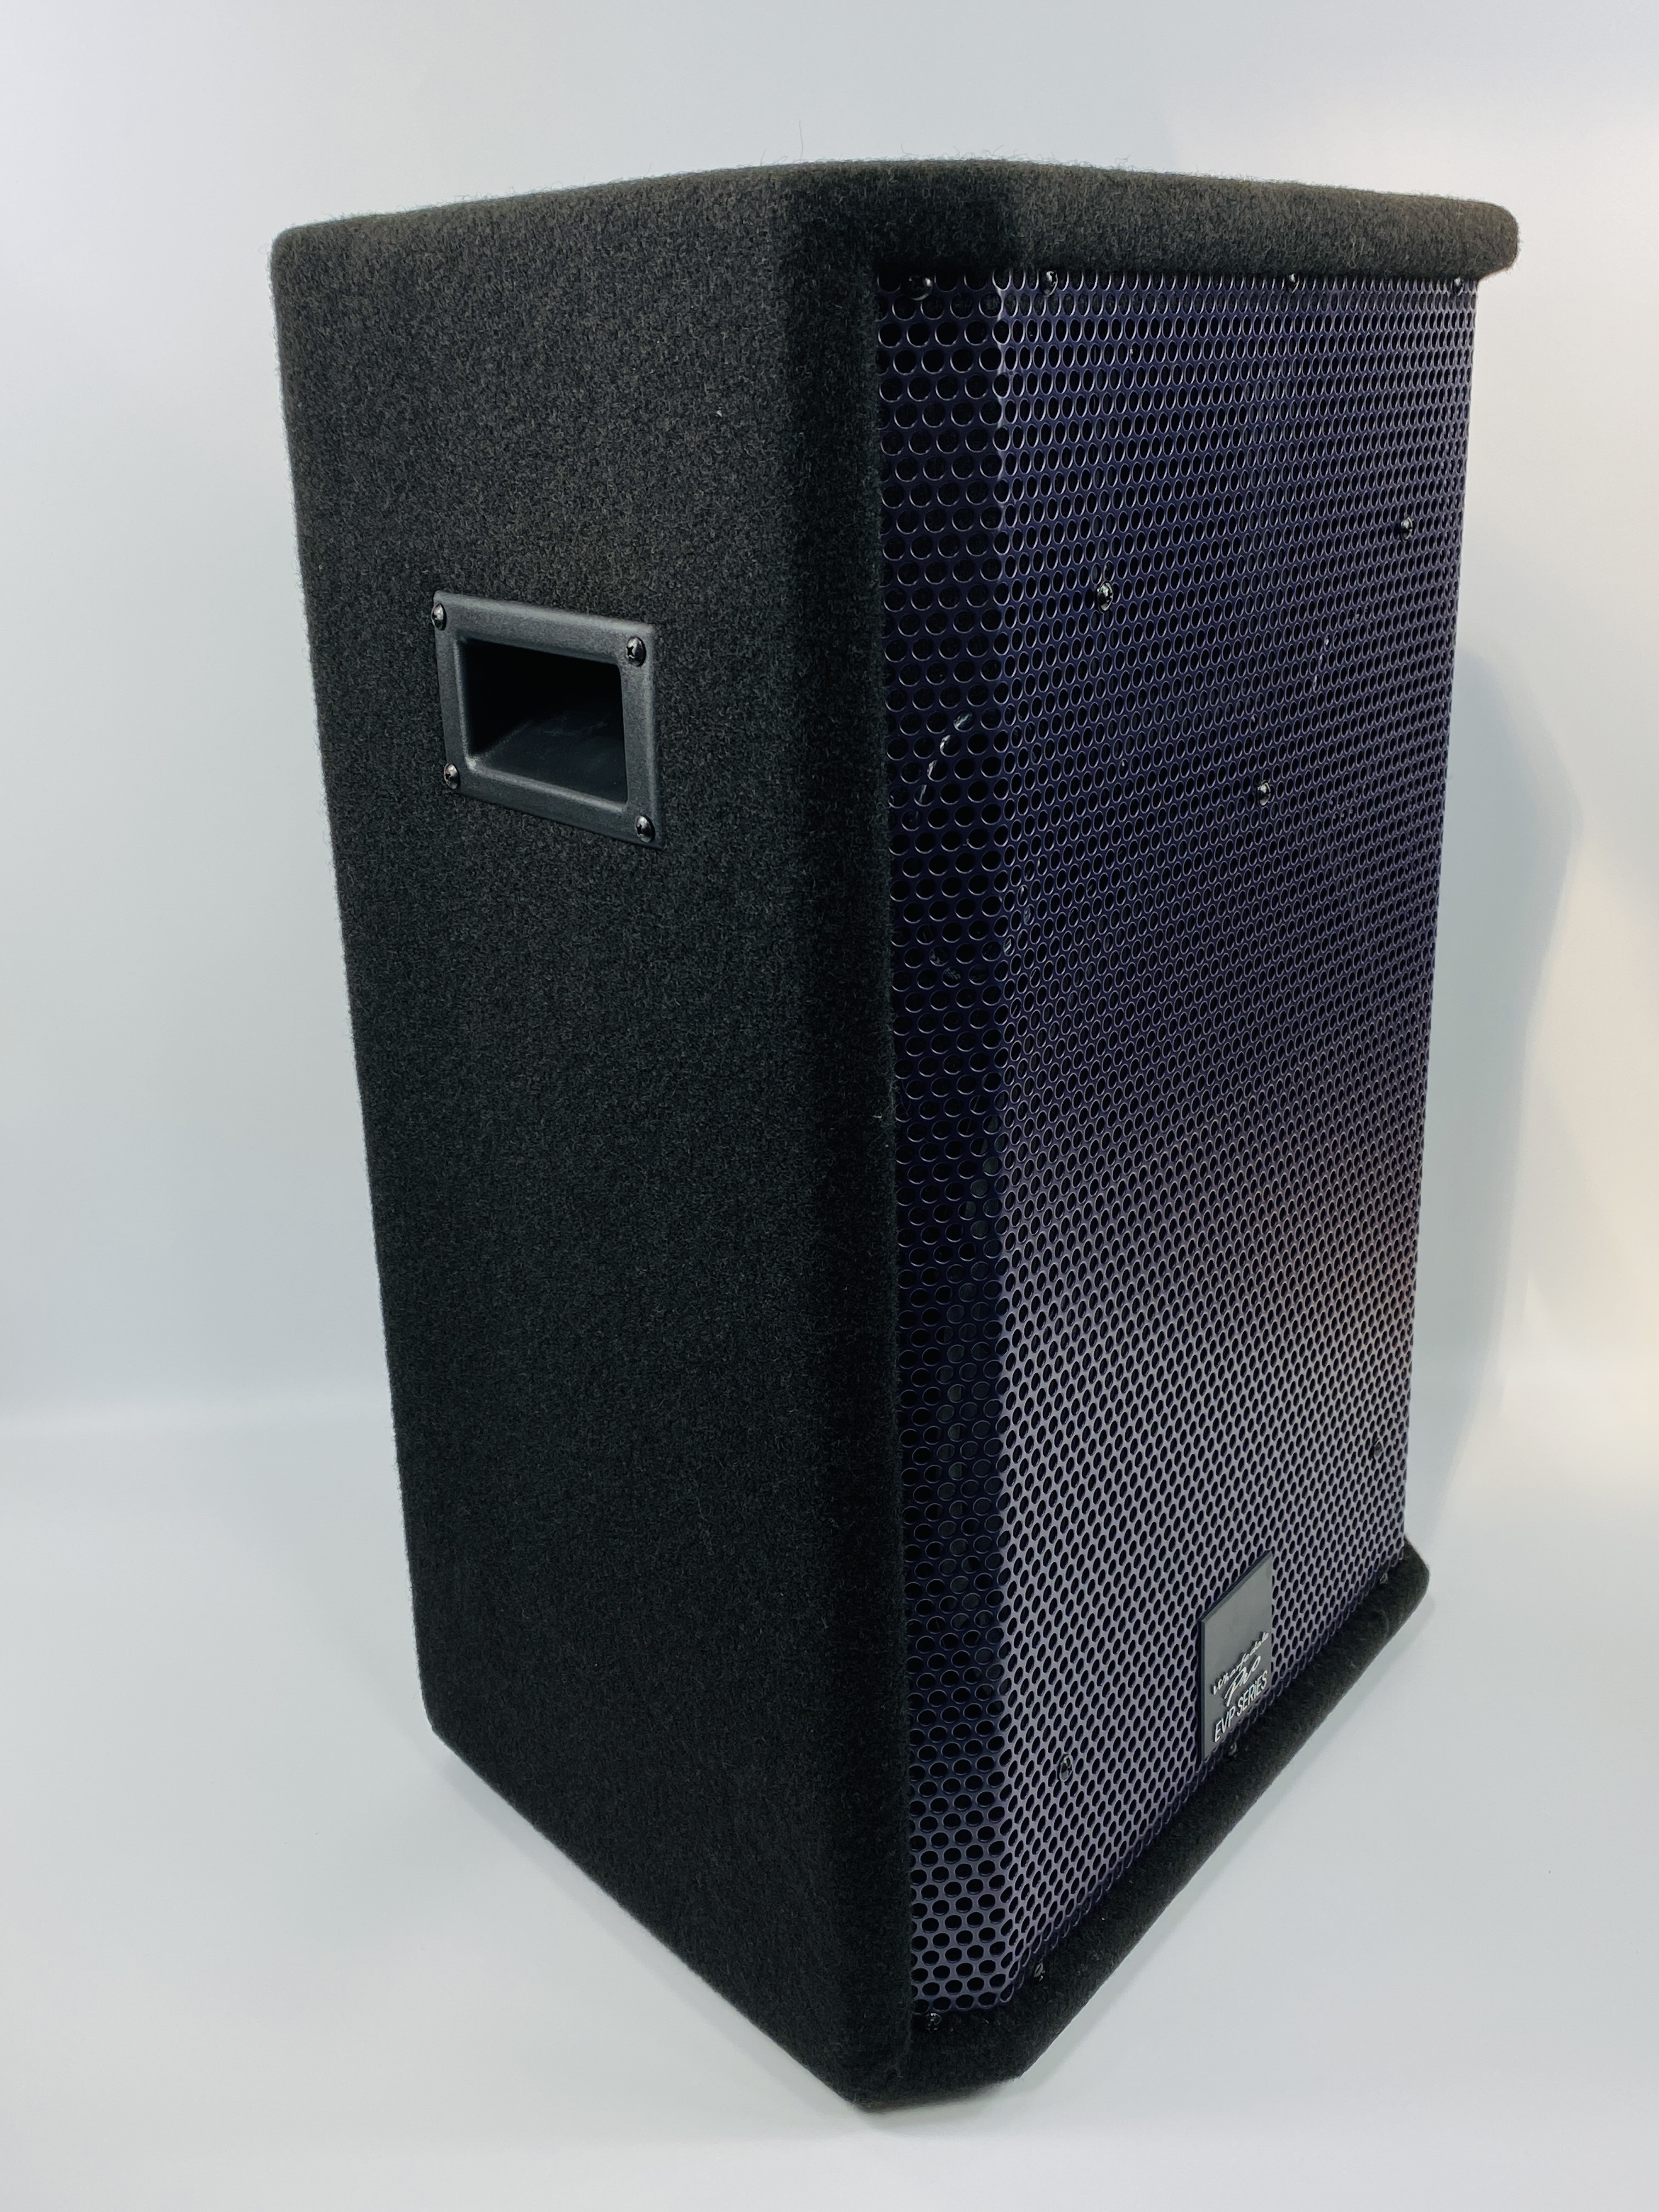 Boxed Wharfedale Pro EVP-15 speaker. - Image 3 of 5